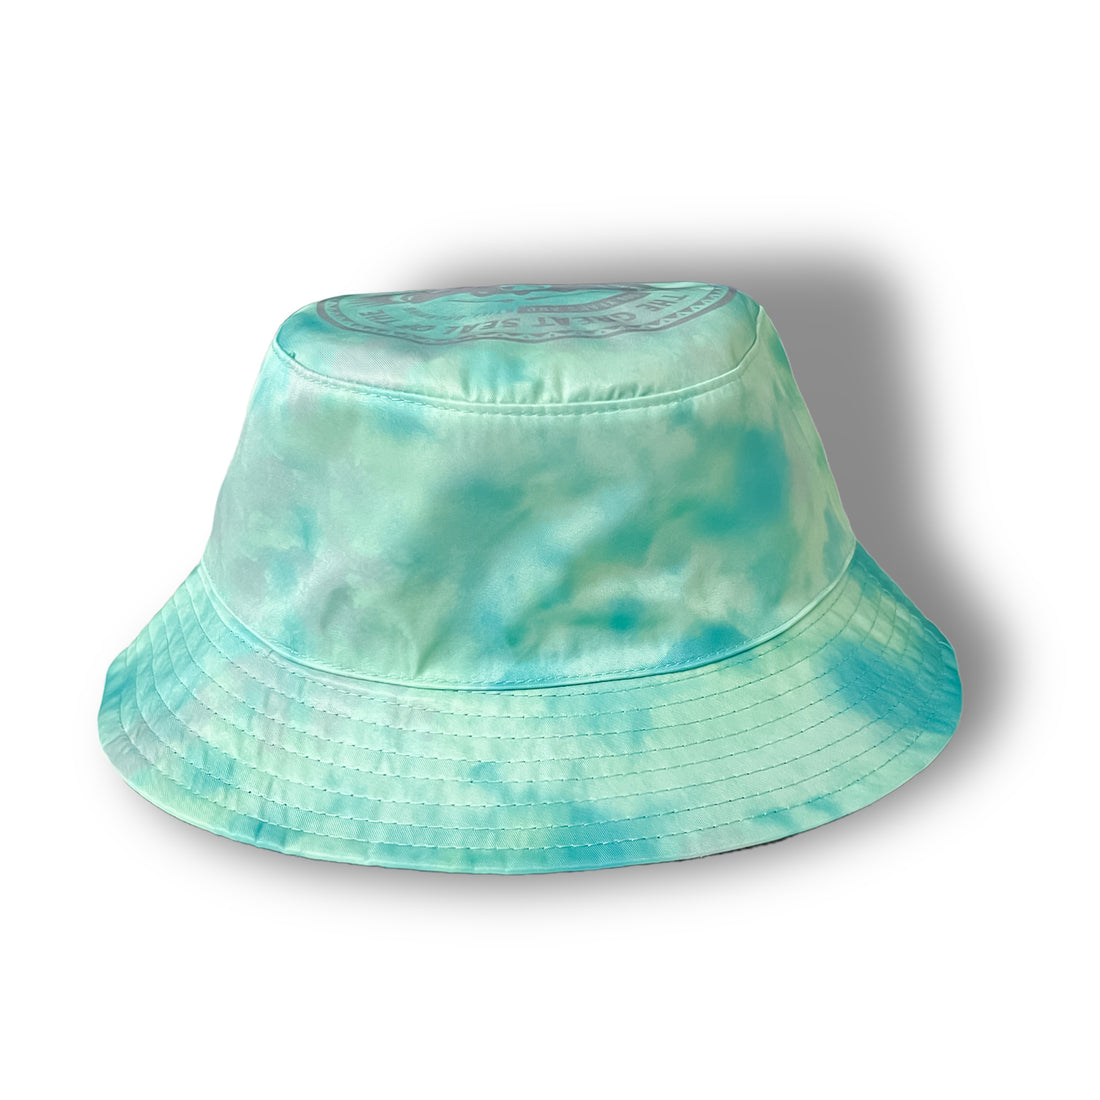 The Halluci Nation - Reversible Bucket Hat